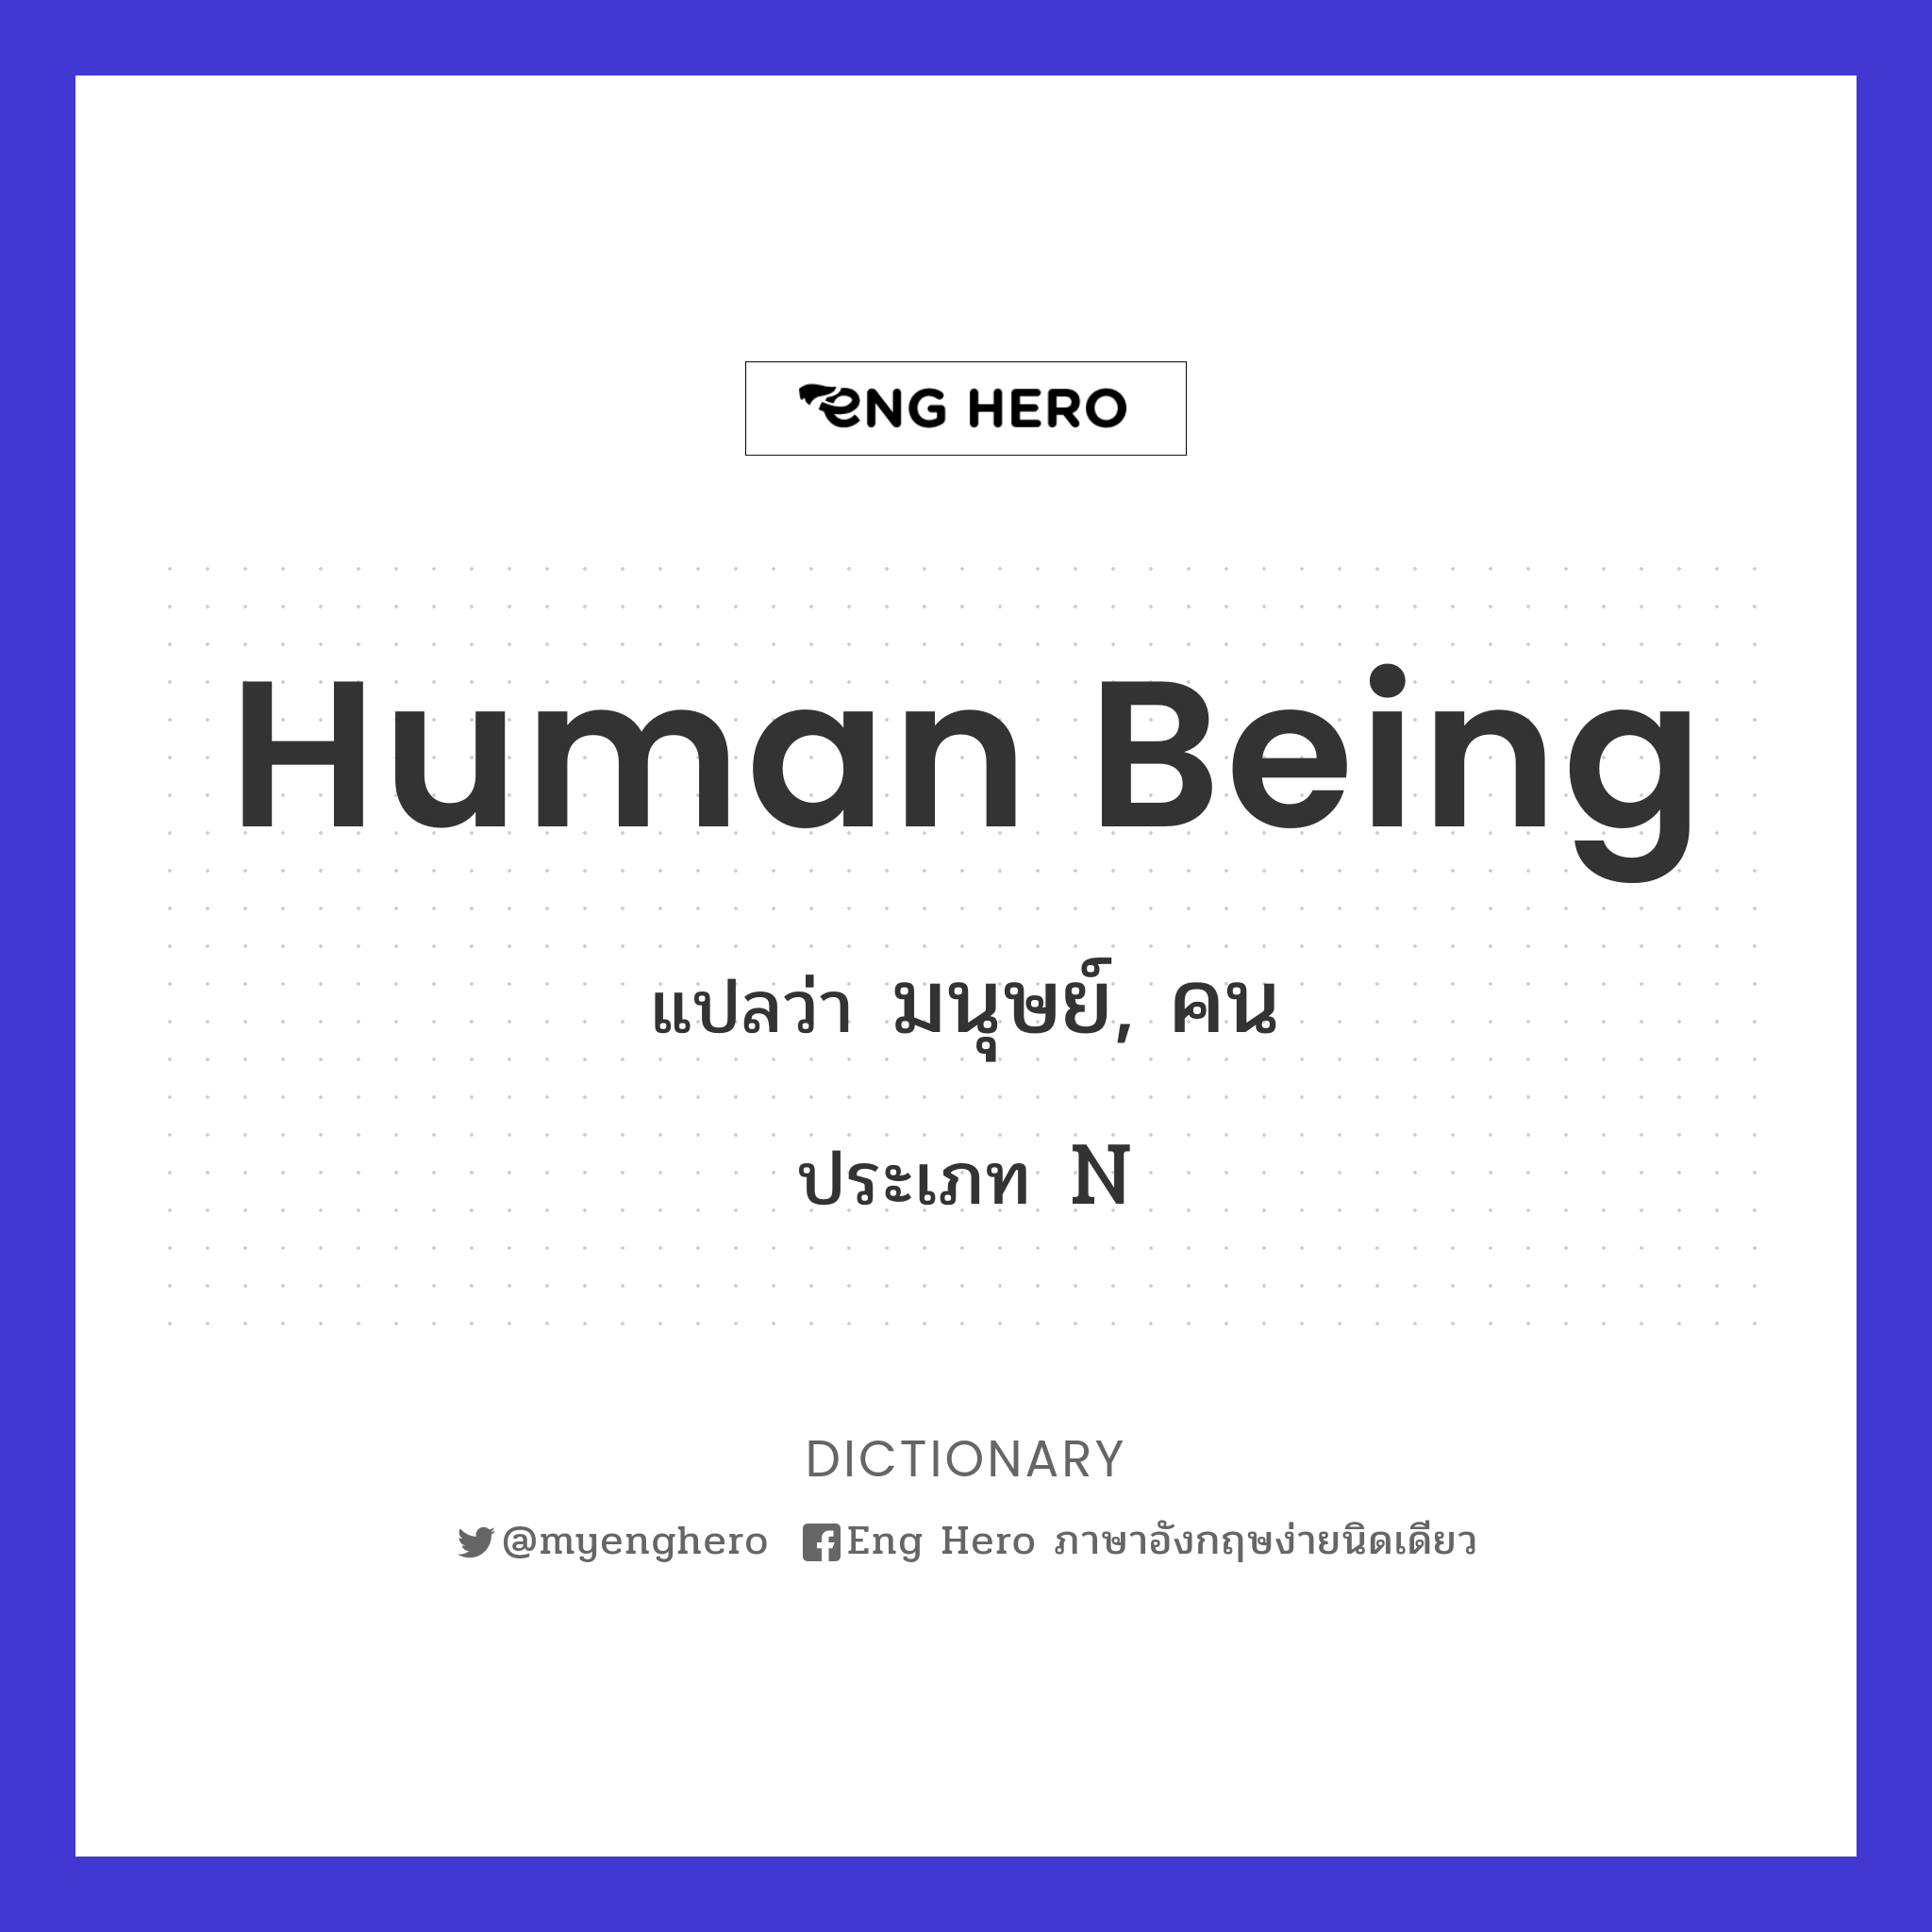 human being